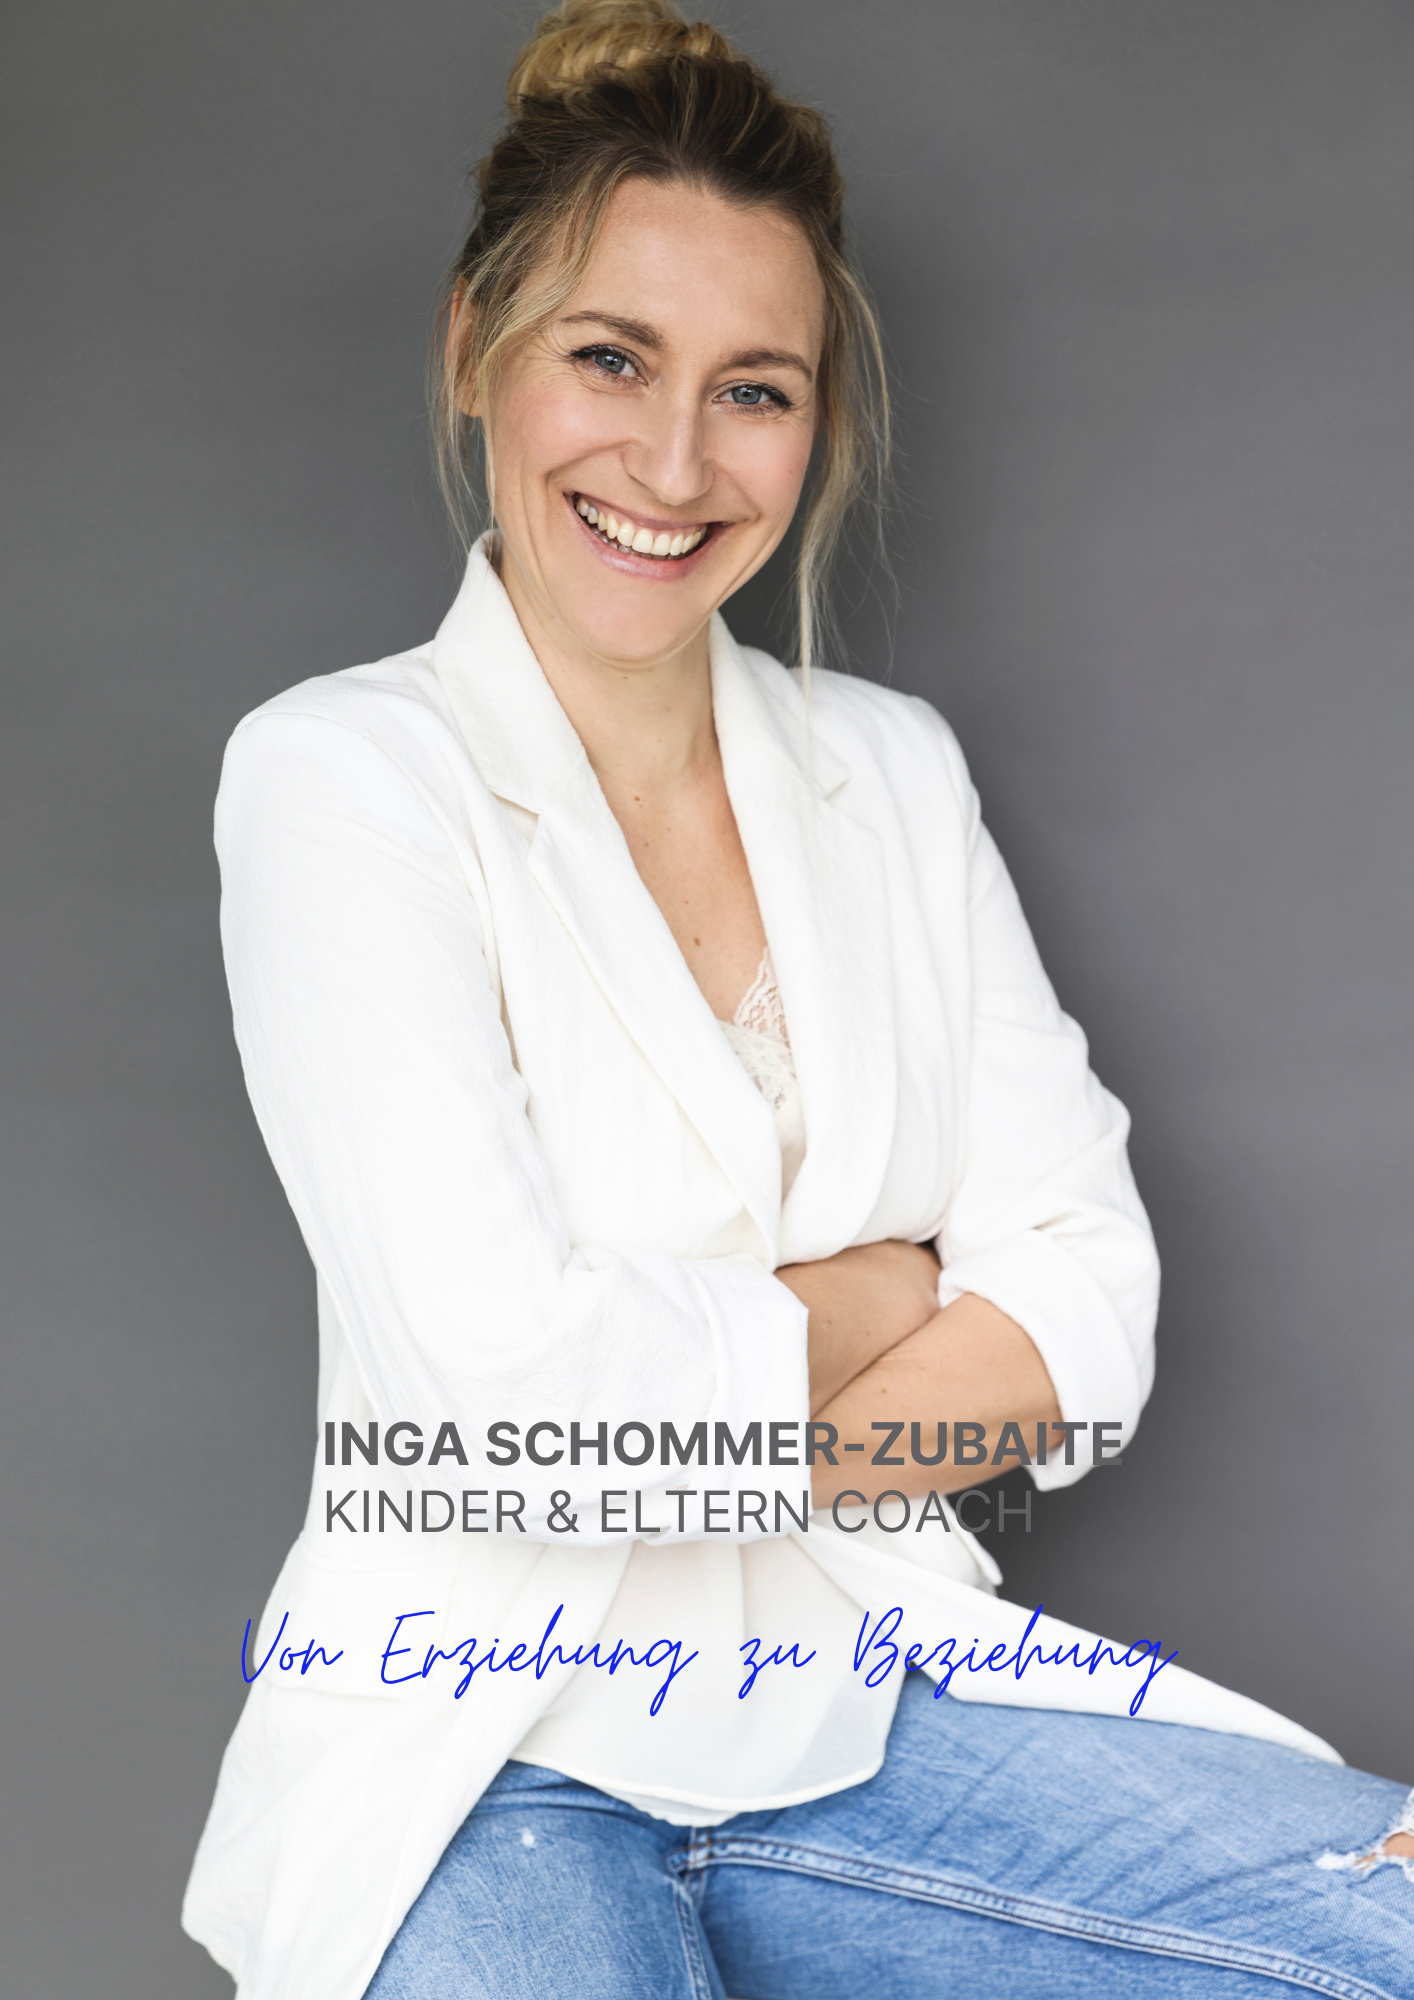 Inga Schommer-Zubaite